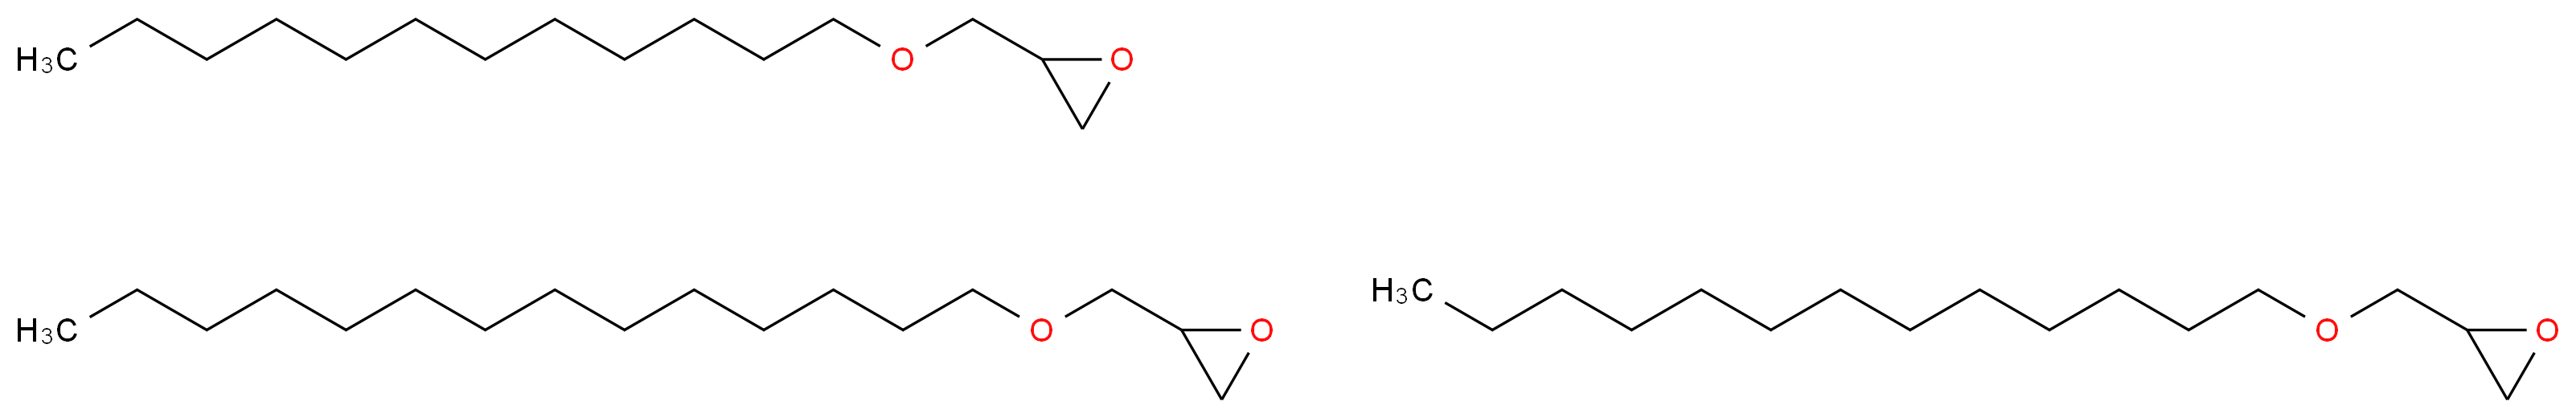 CAS_68609-97-2 molecular structure